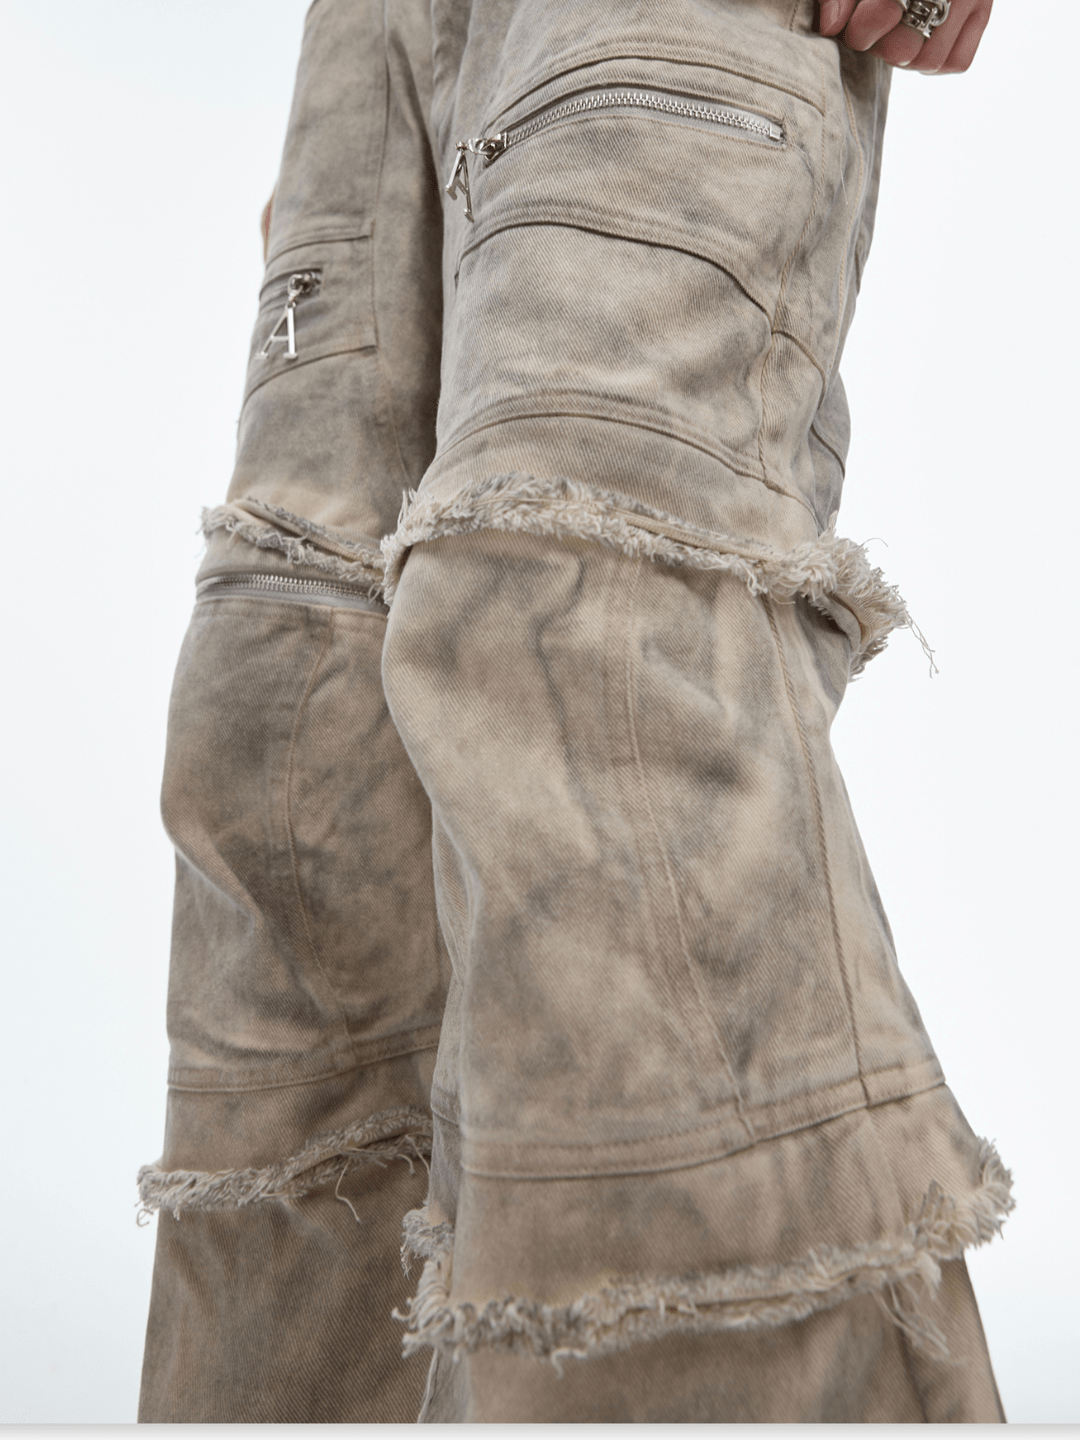 [CulturE] Workwear Denim Pants na1304